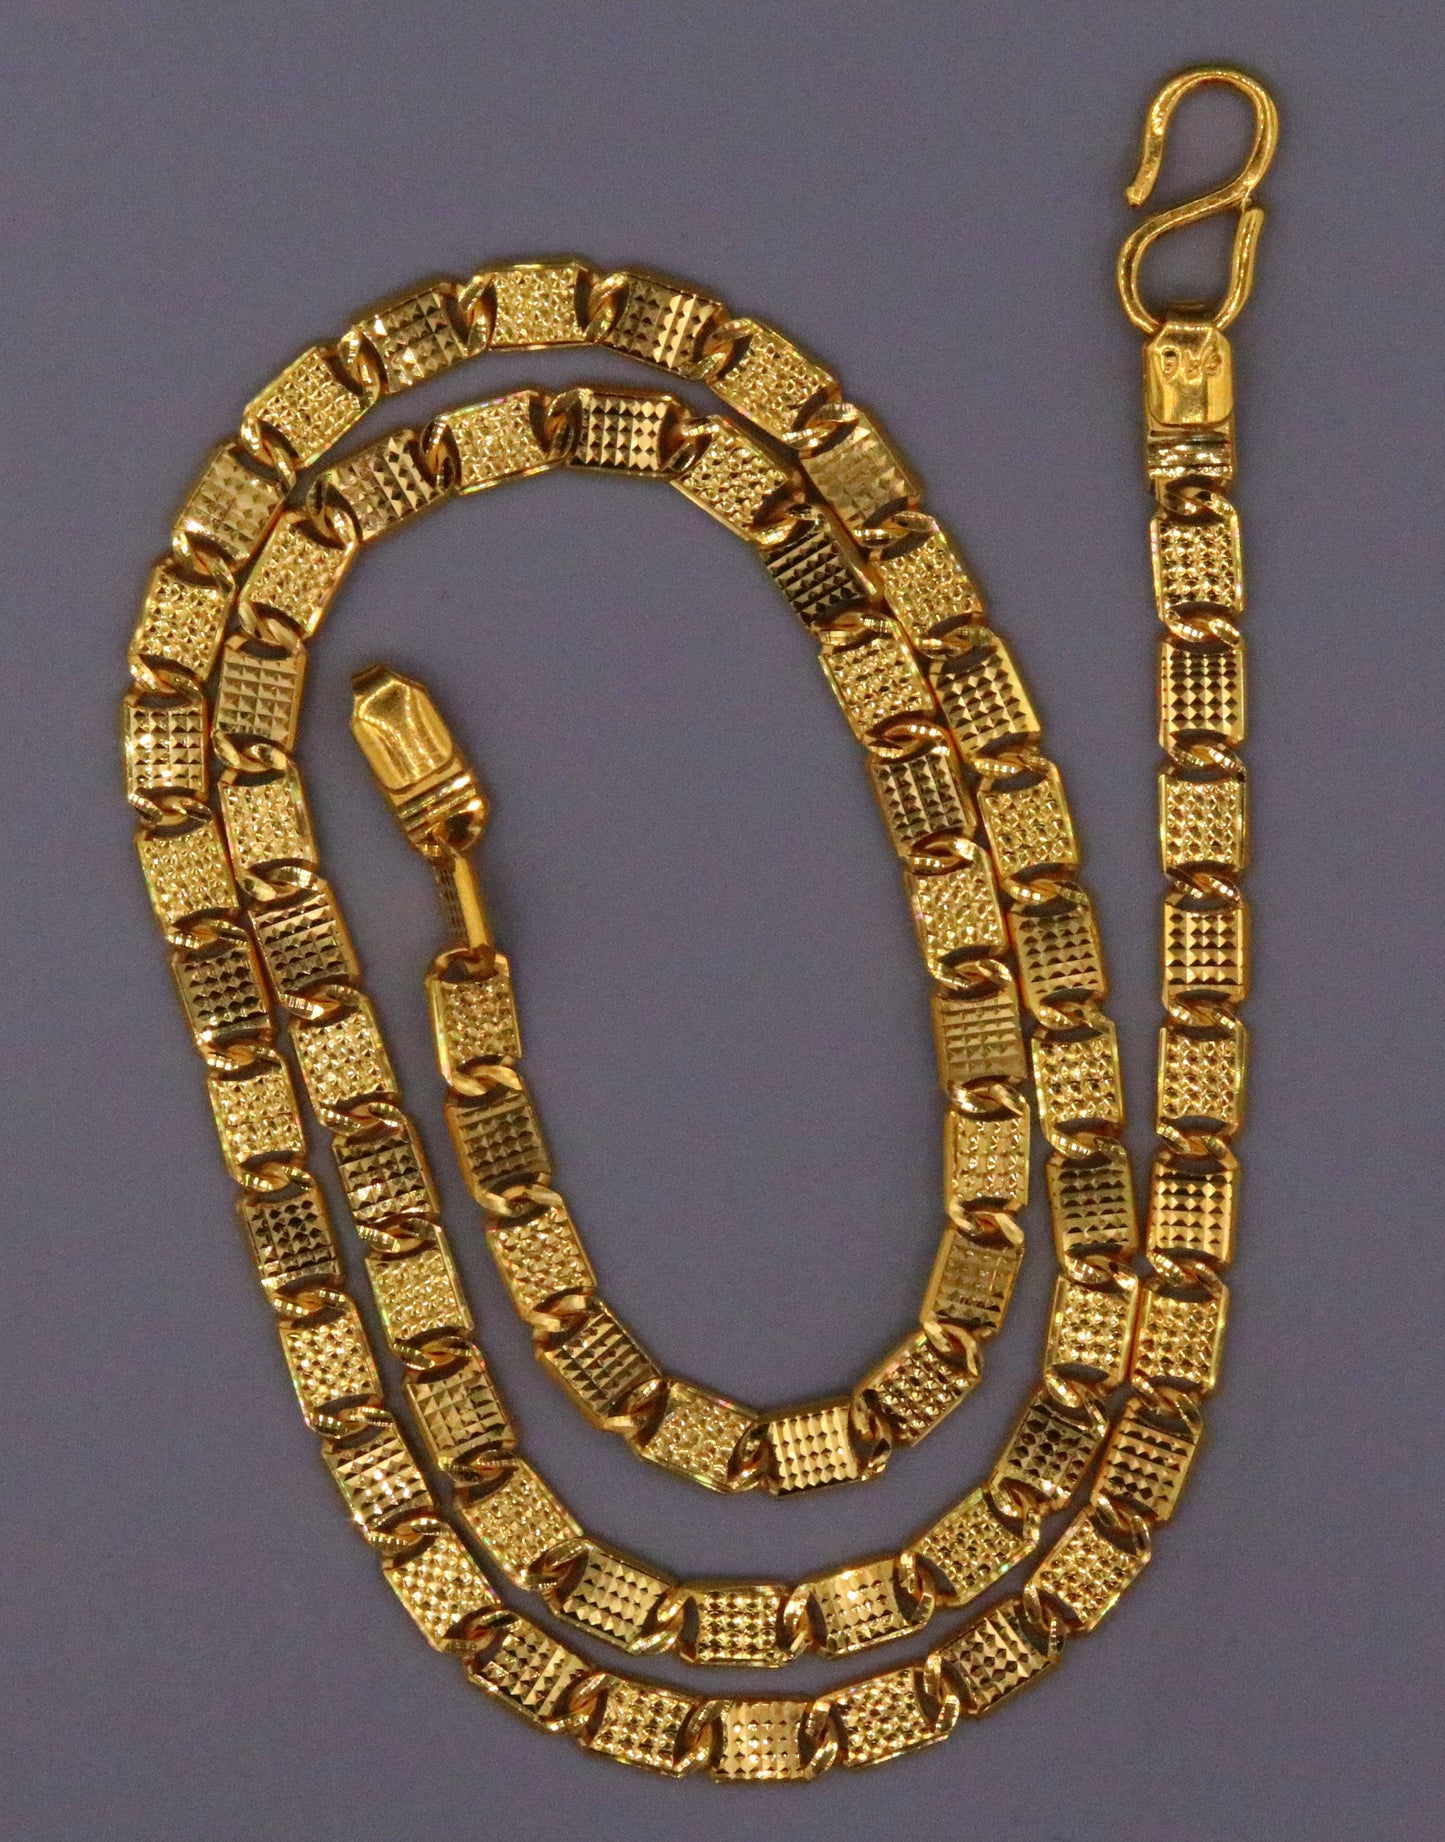 Vintage top class handmade diamond cut nawabi chain 22karat yellow gold 20 inches necklace chain gifting jewelry - TRIBAL ORNAMENTS